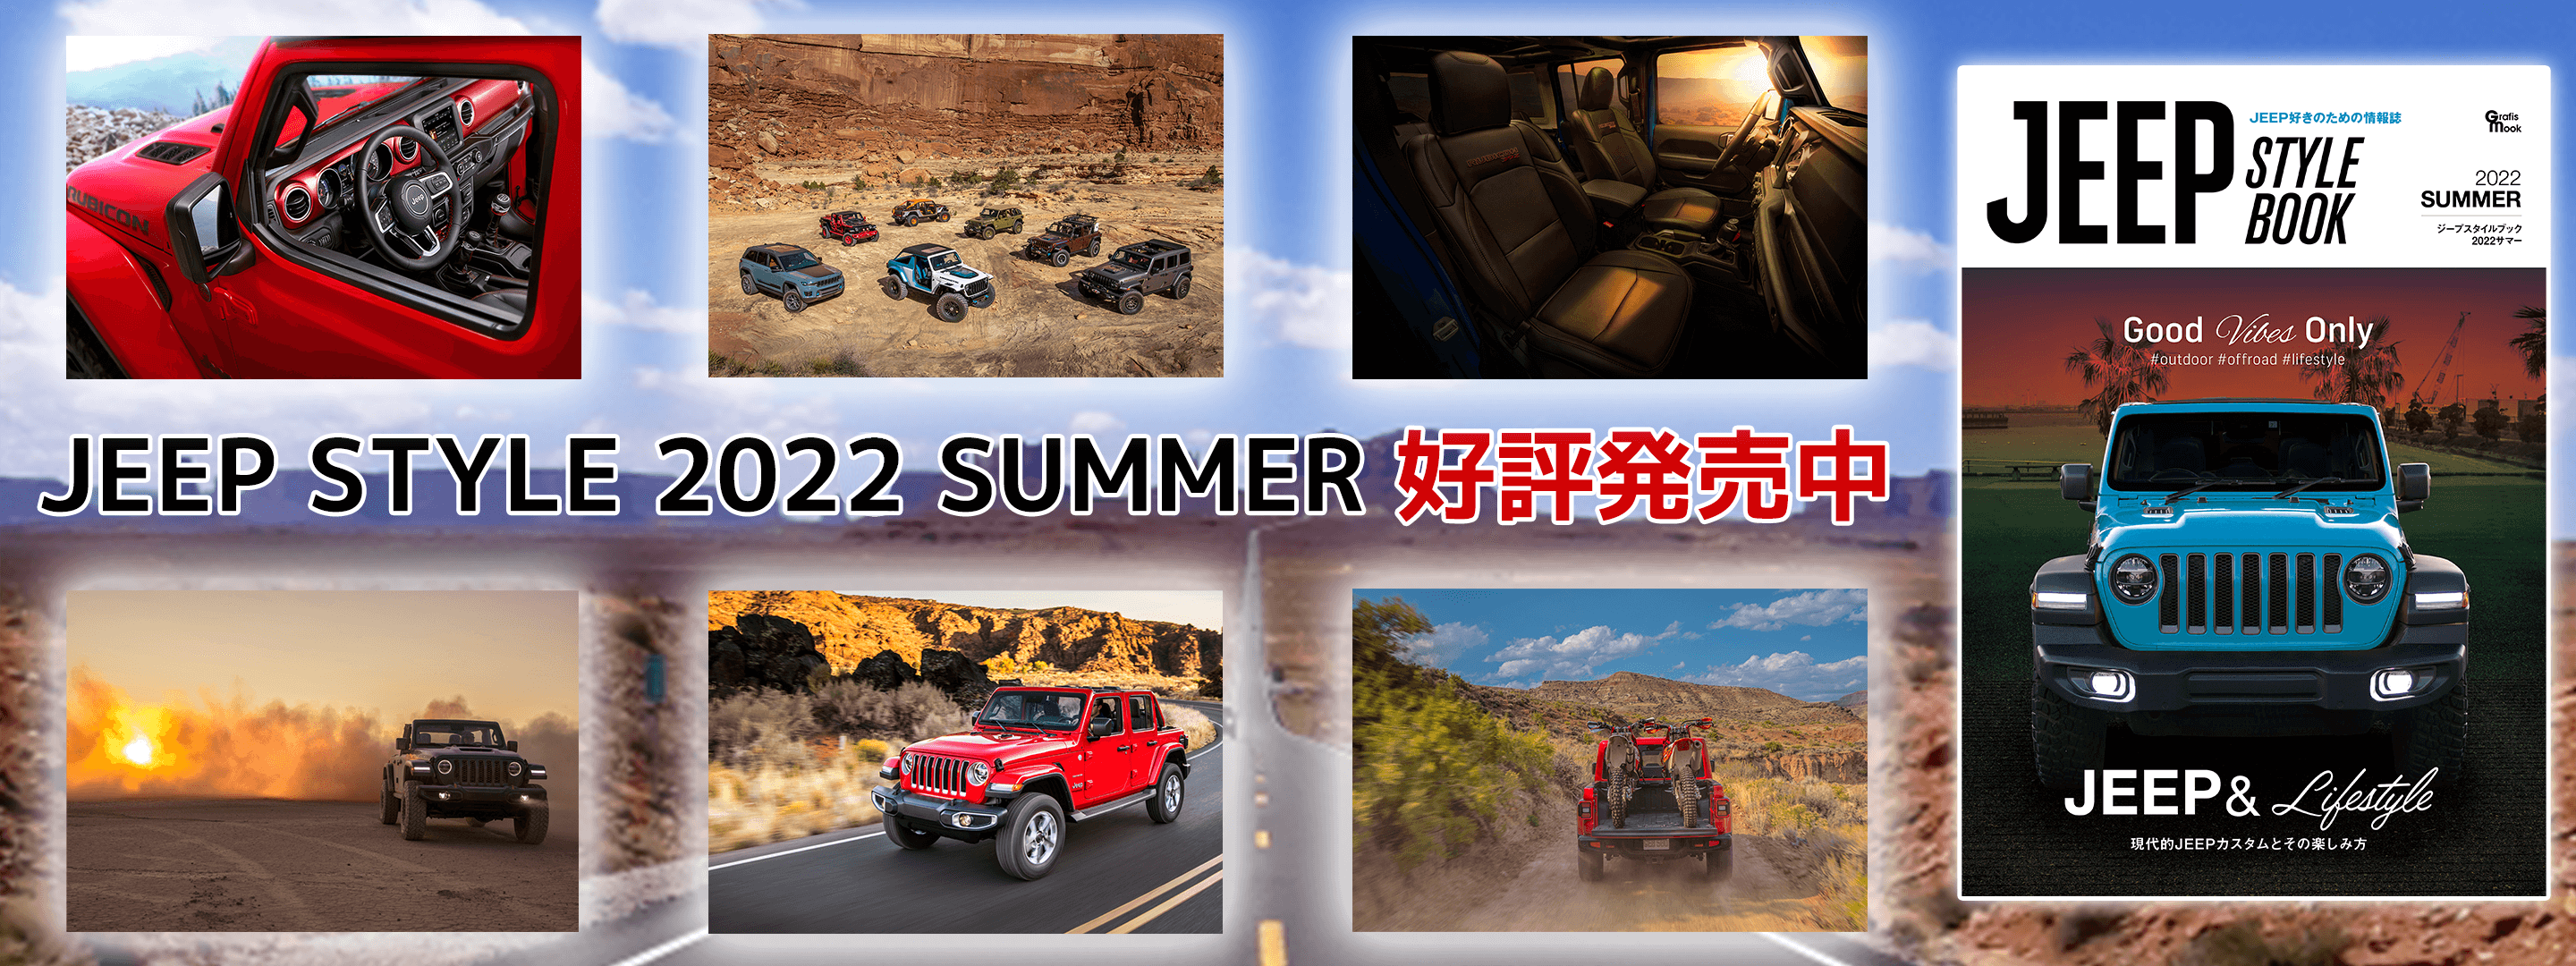 JeepStyle 2022 Summer 好評発売中